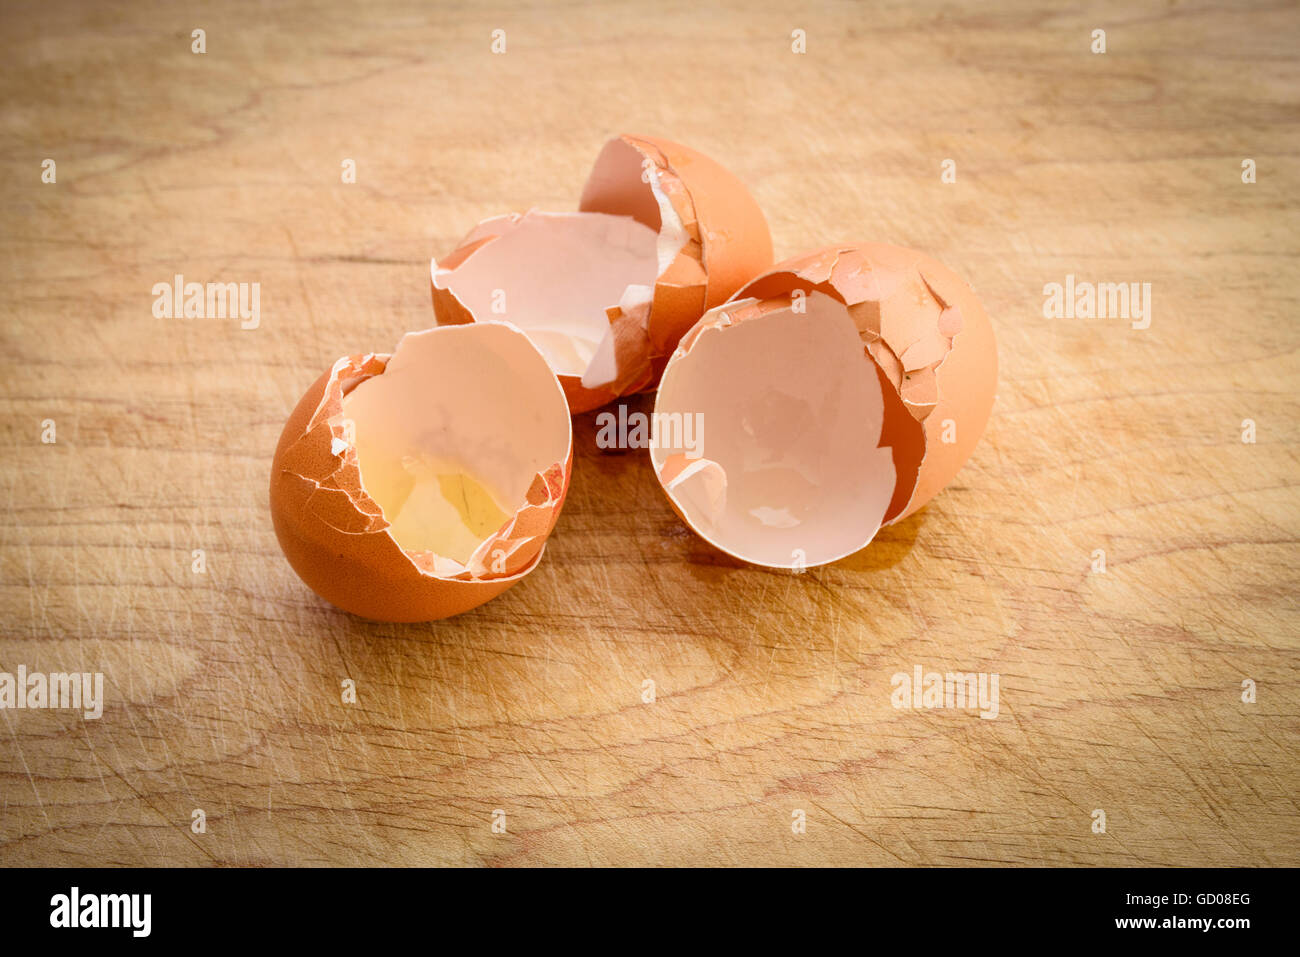 Three broken eggshells on a wooden board Stock Photo